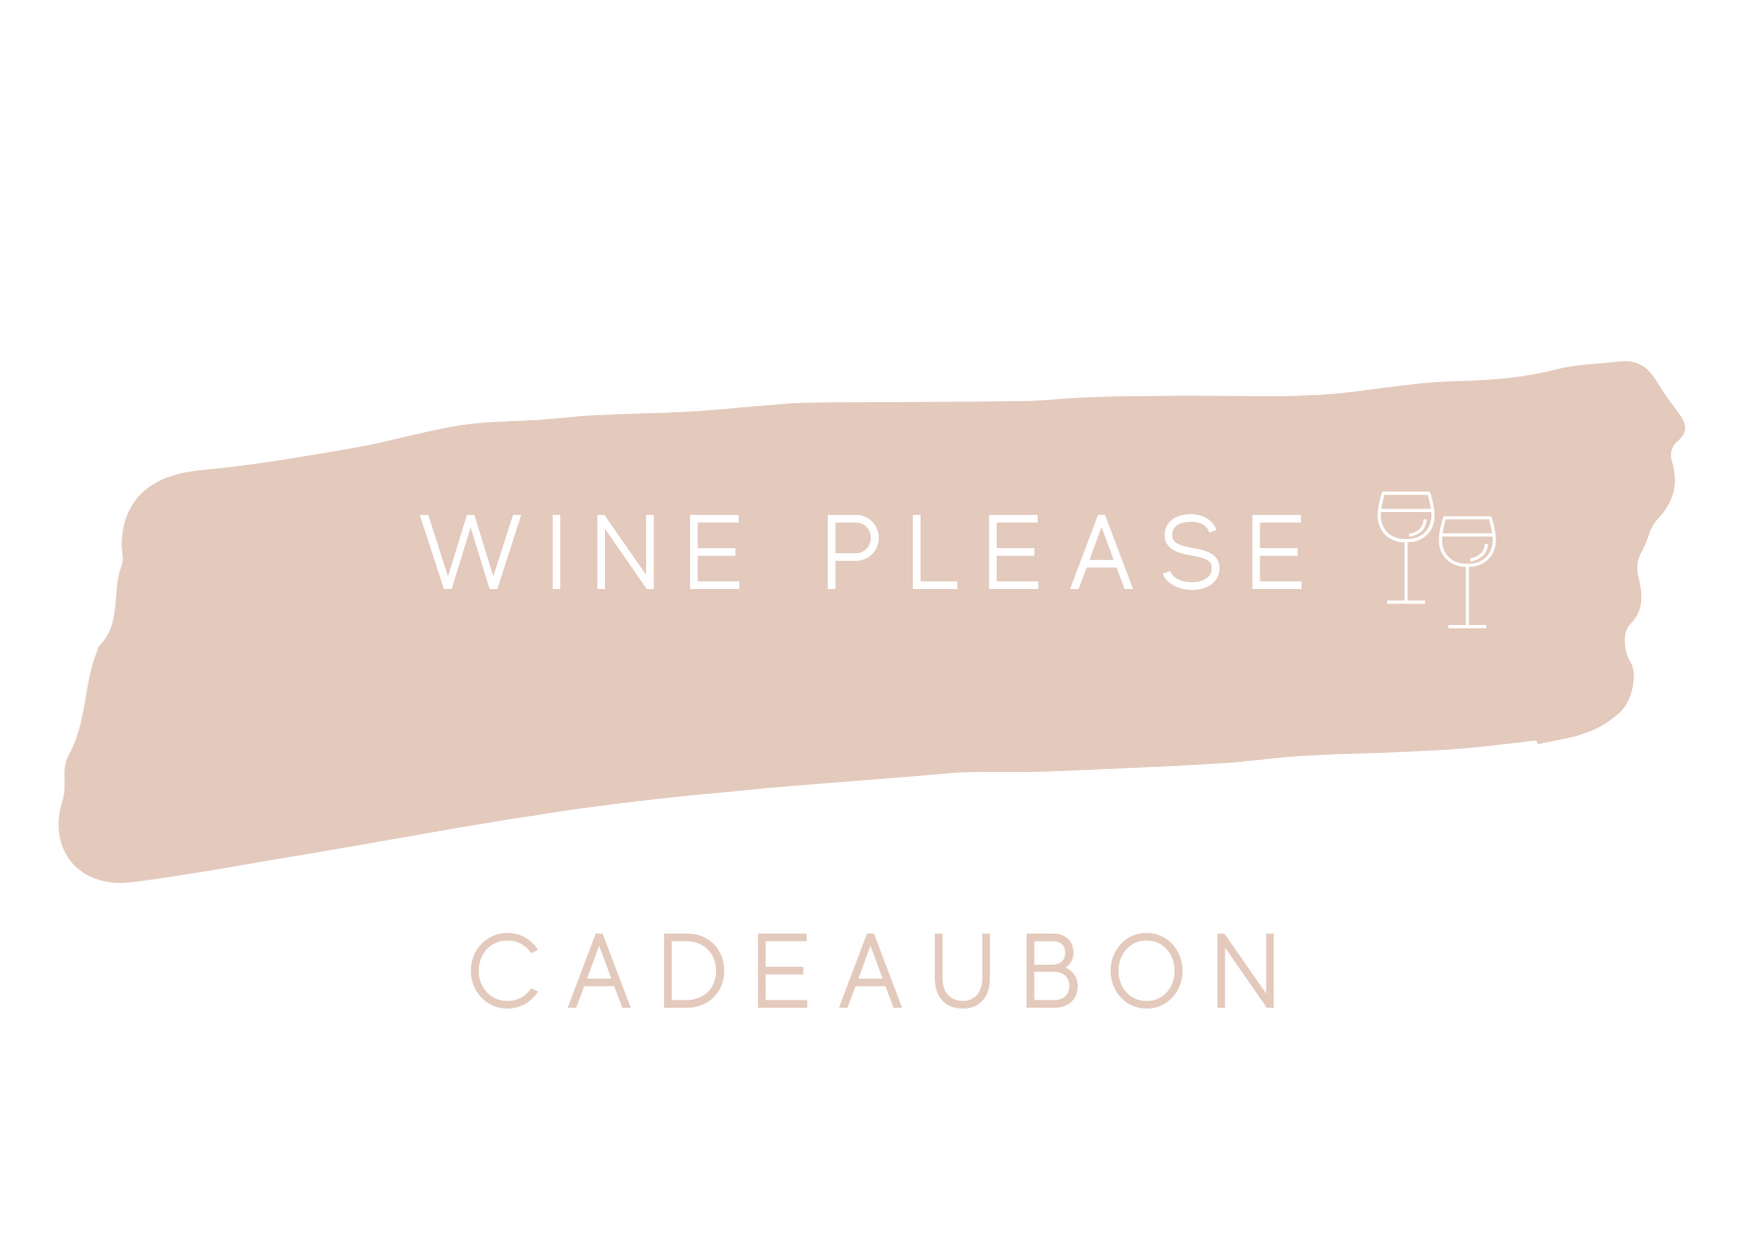 WINE PLEASE CADEAUBON